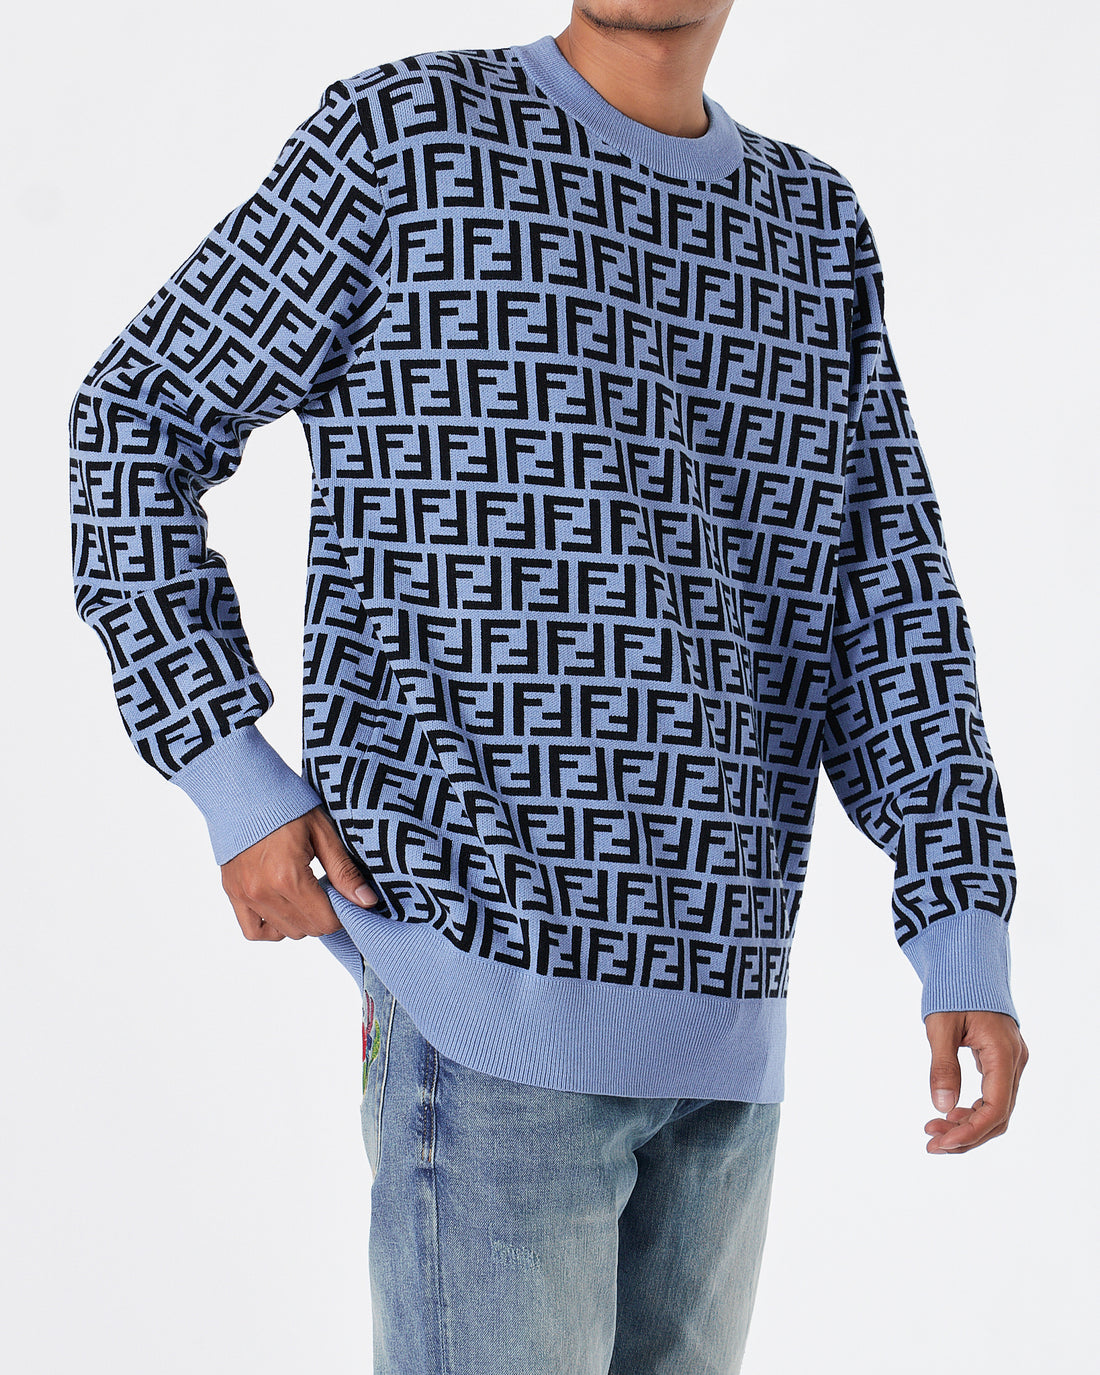 FEN Monogram Unisex Blue Soft Knit Sweater 59.90